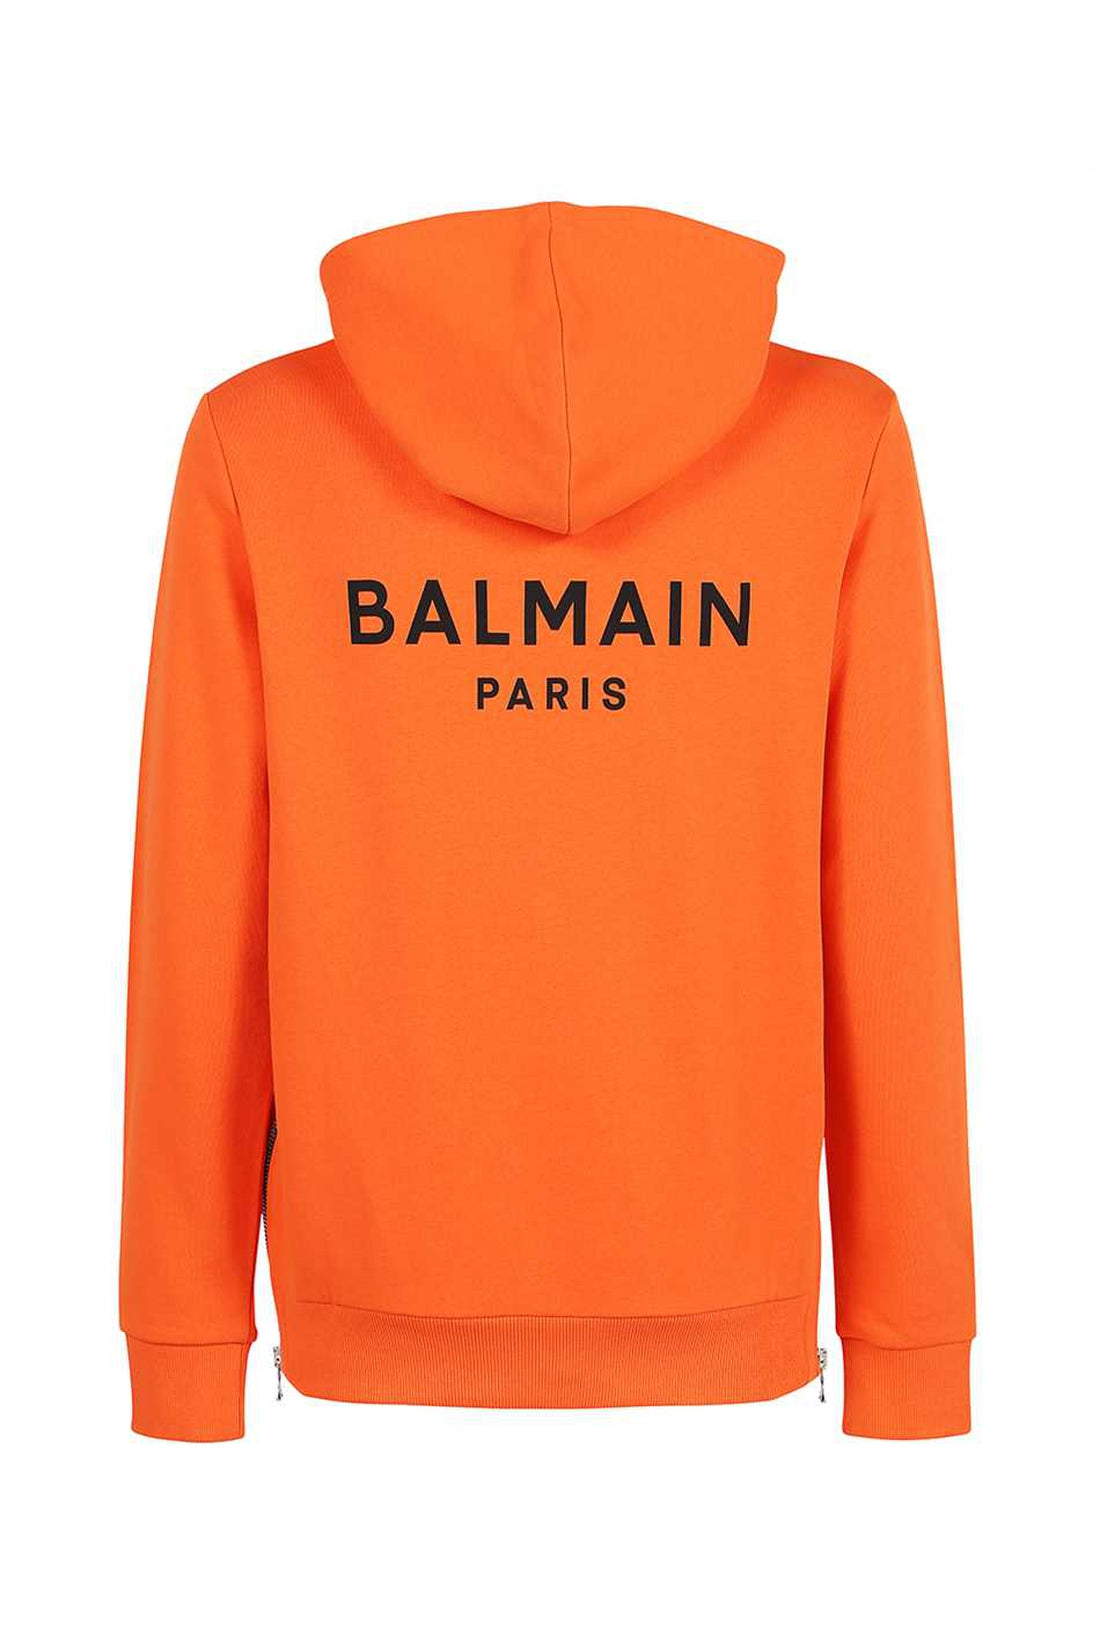 Balmain-OUTLET-SALE-Cotton full-zip sweatshirt-ARCHIVIST